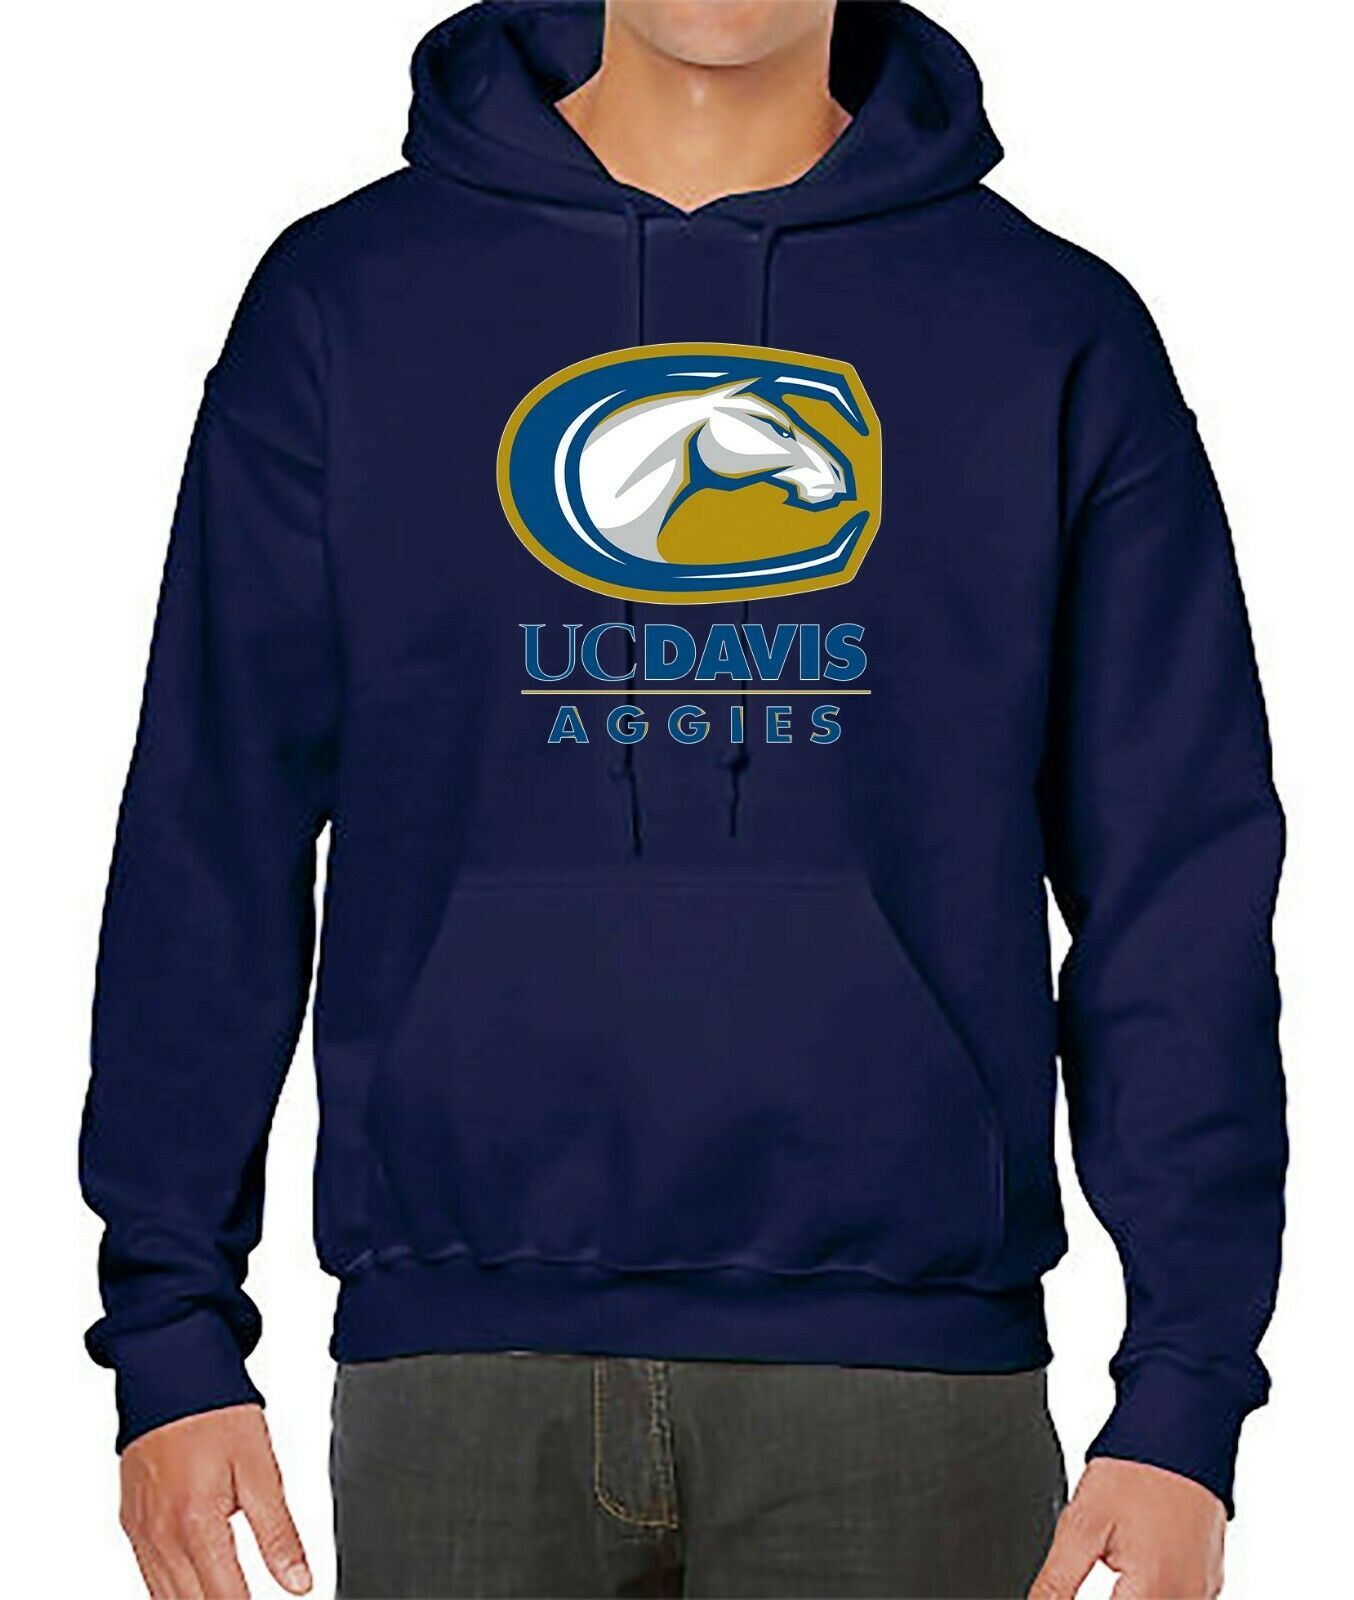 NCAA Basketball team hoodie - sweater with UC Davis logo - comfort ...